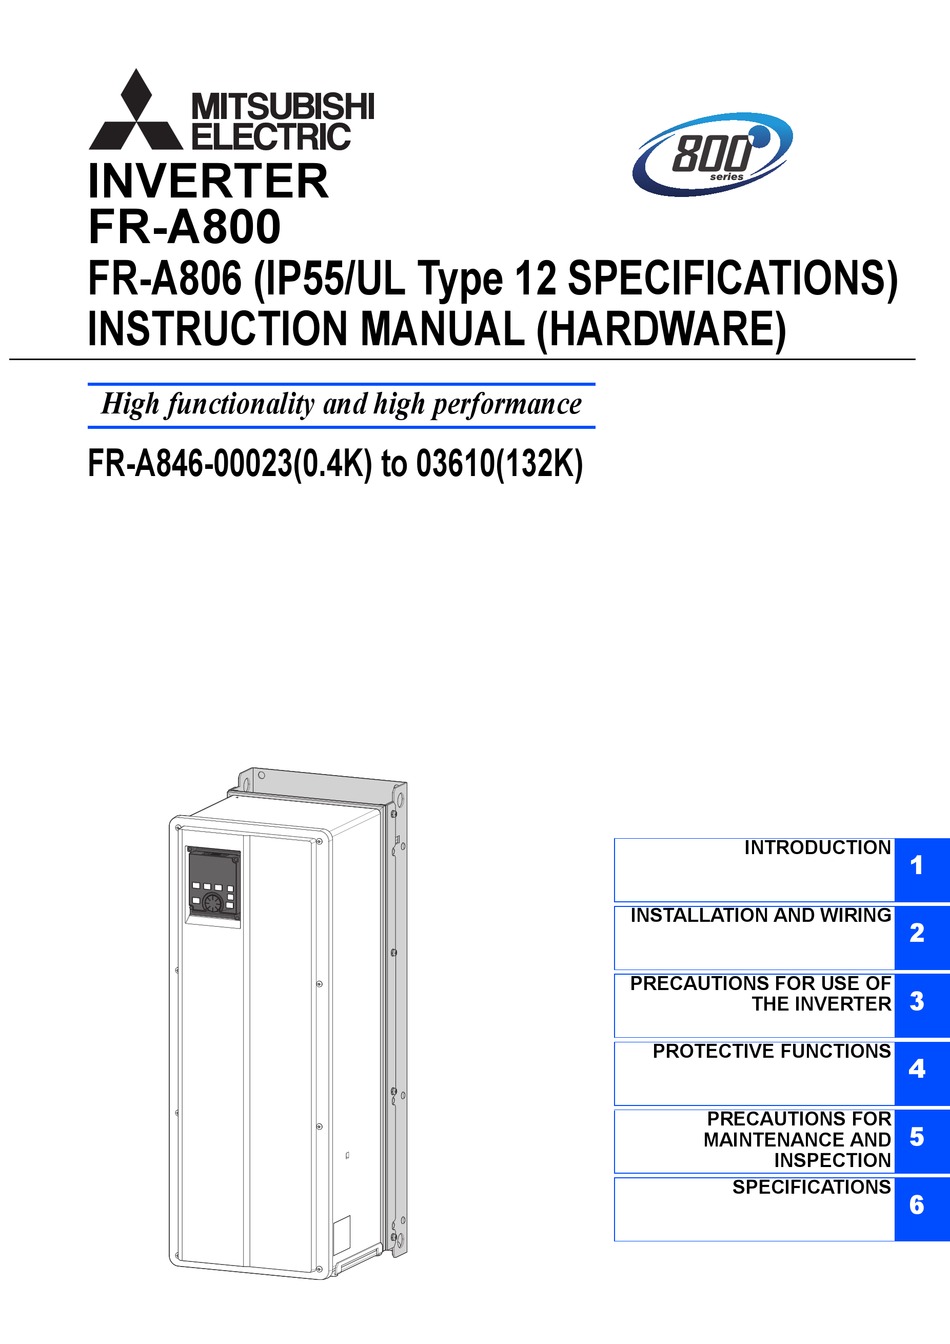 MITSUBISHI ELECTRIC FRA800 INSTRUCTION MANUAL Pdf